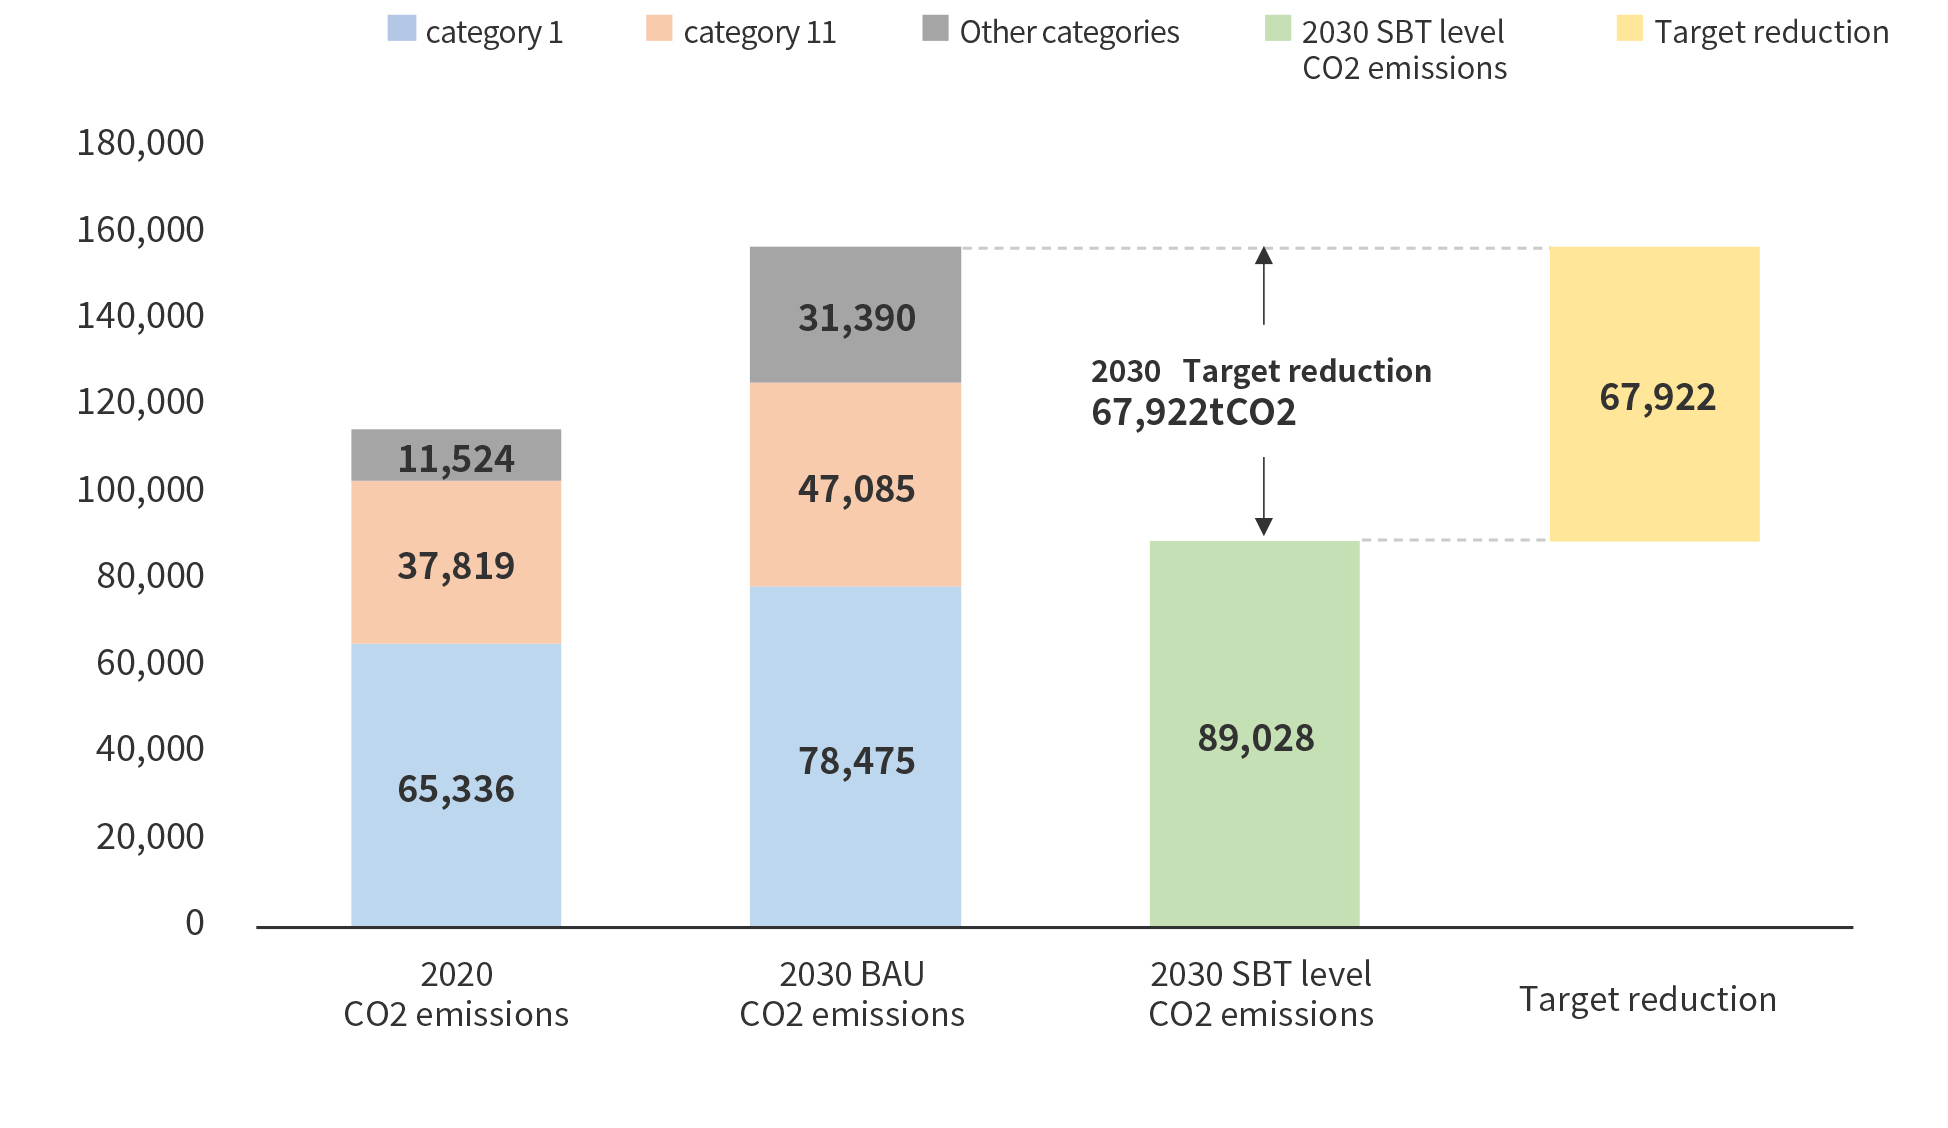 Scope 3 emissions reduction target